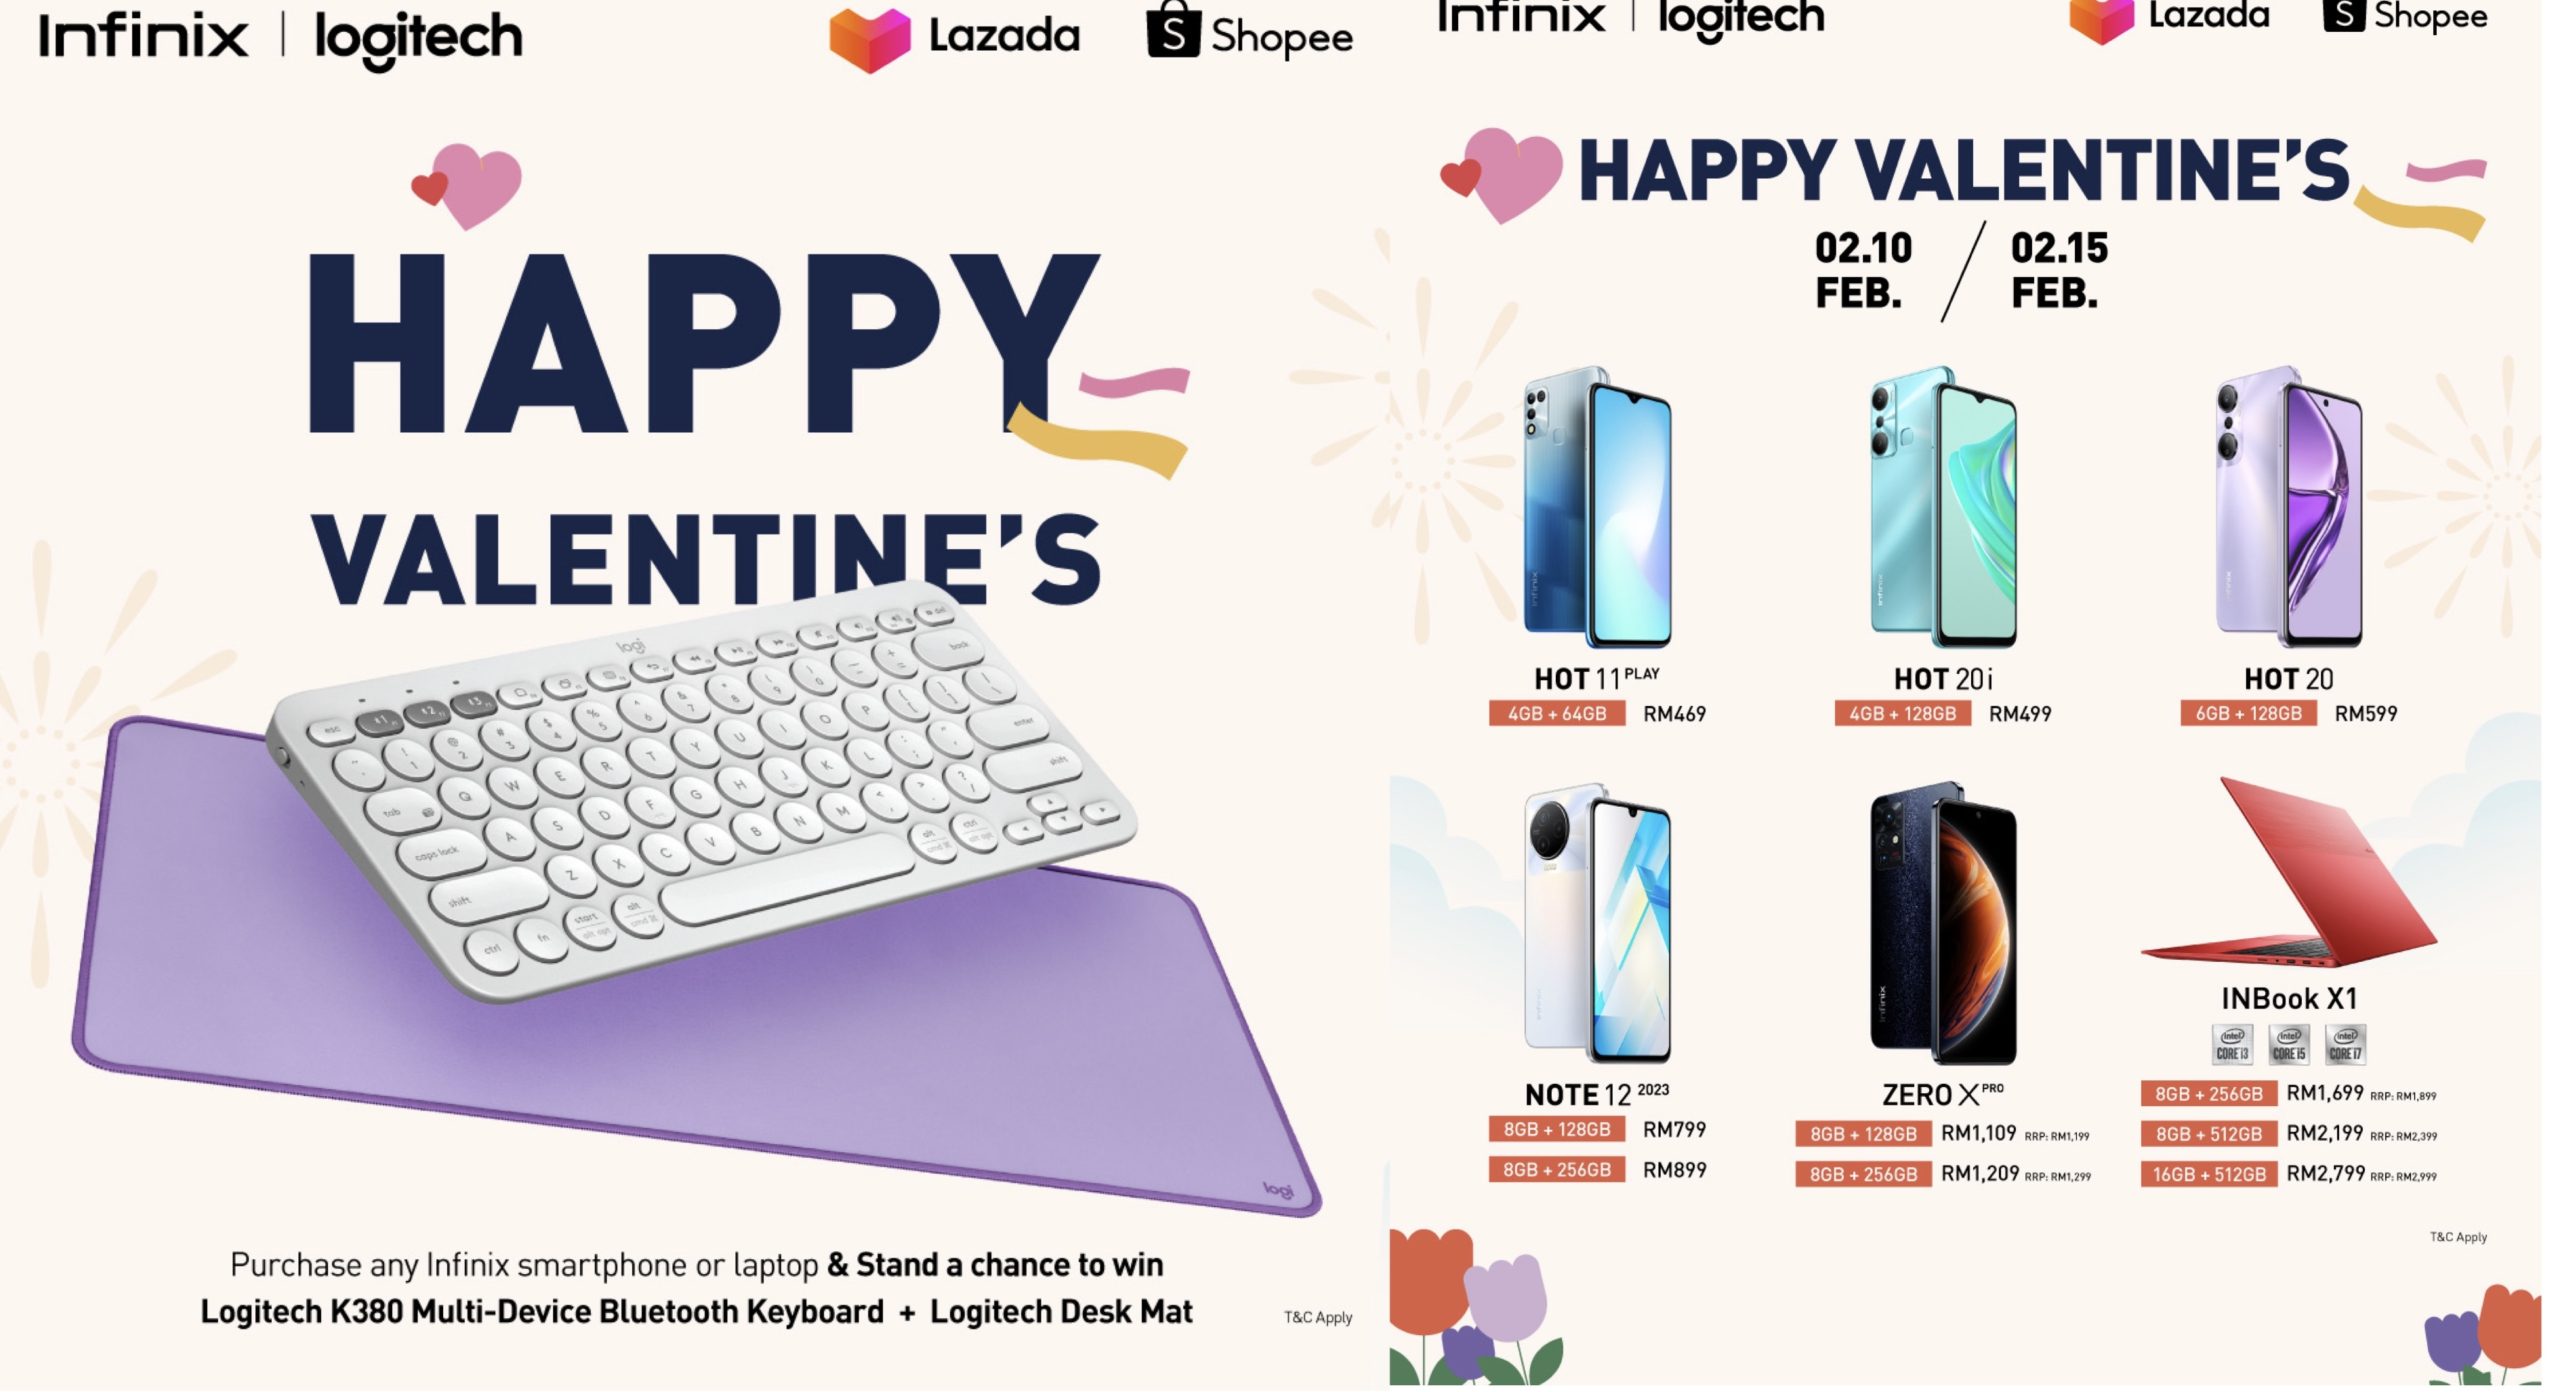 Promosi Hari Valentine Infinix x Logitech kini ditawarkan di Lazada dan Shopee 5